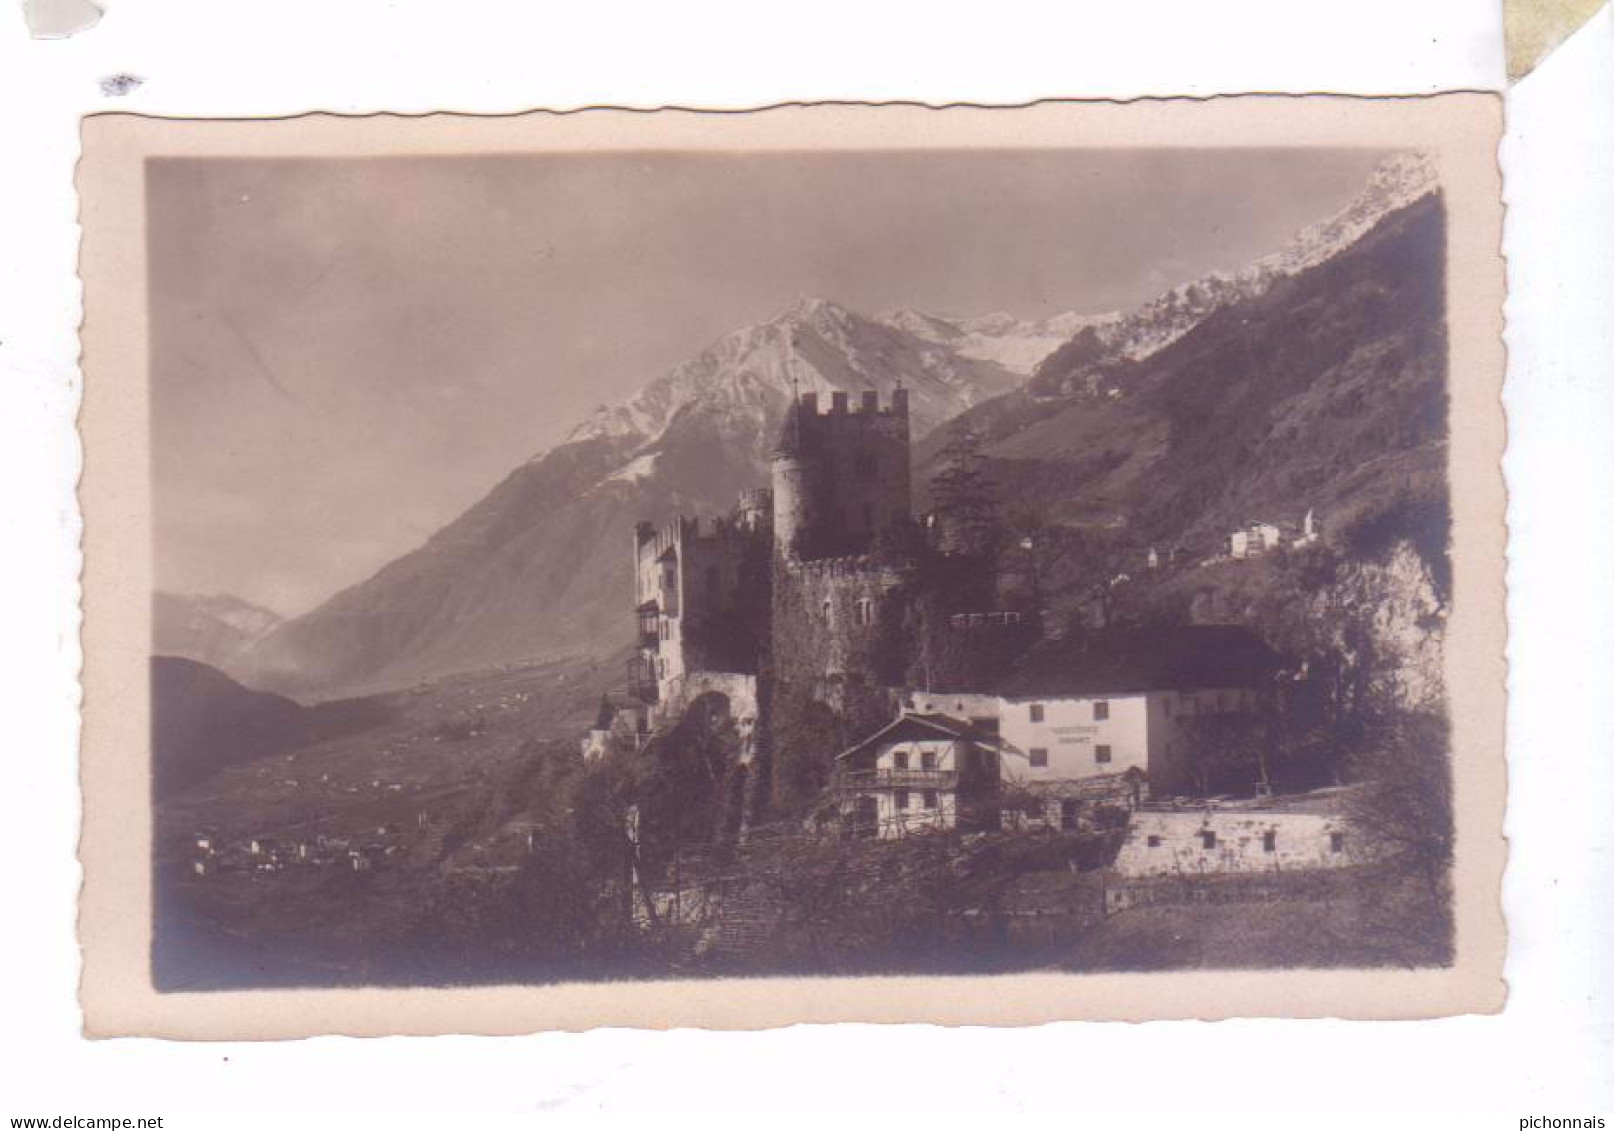 Brunnenburg Castle South Tyrol Italy - Merano